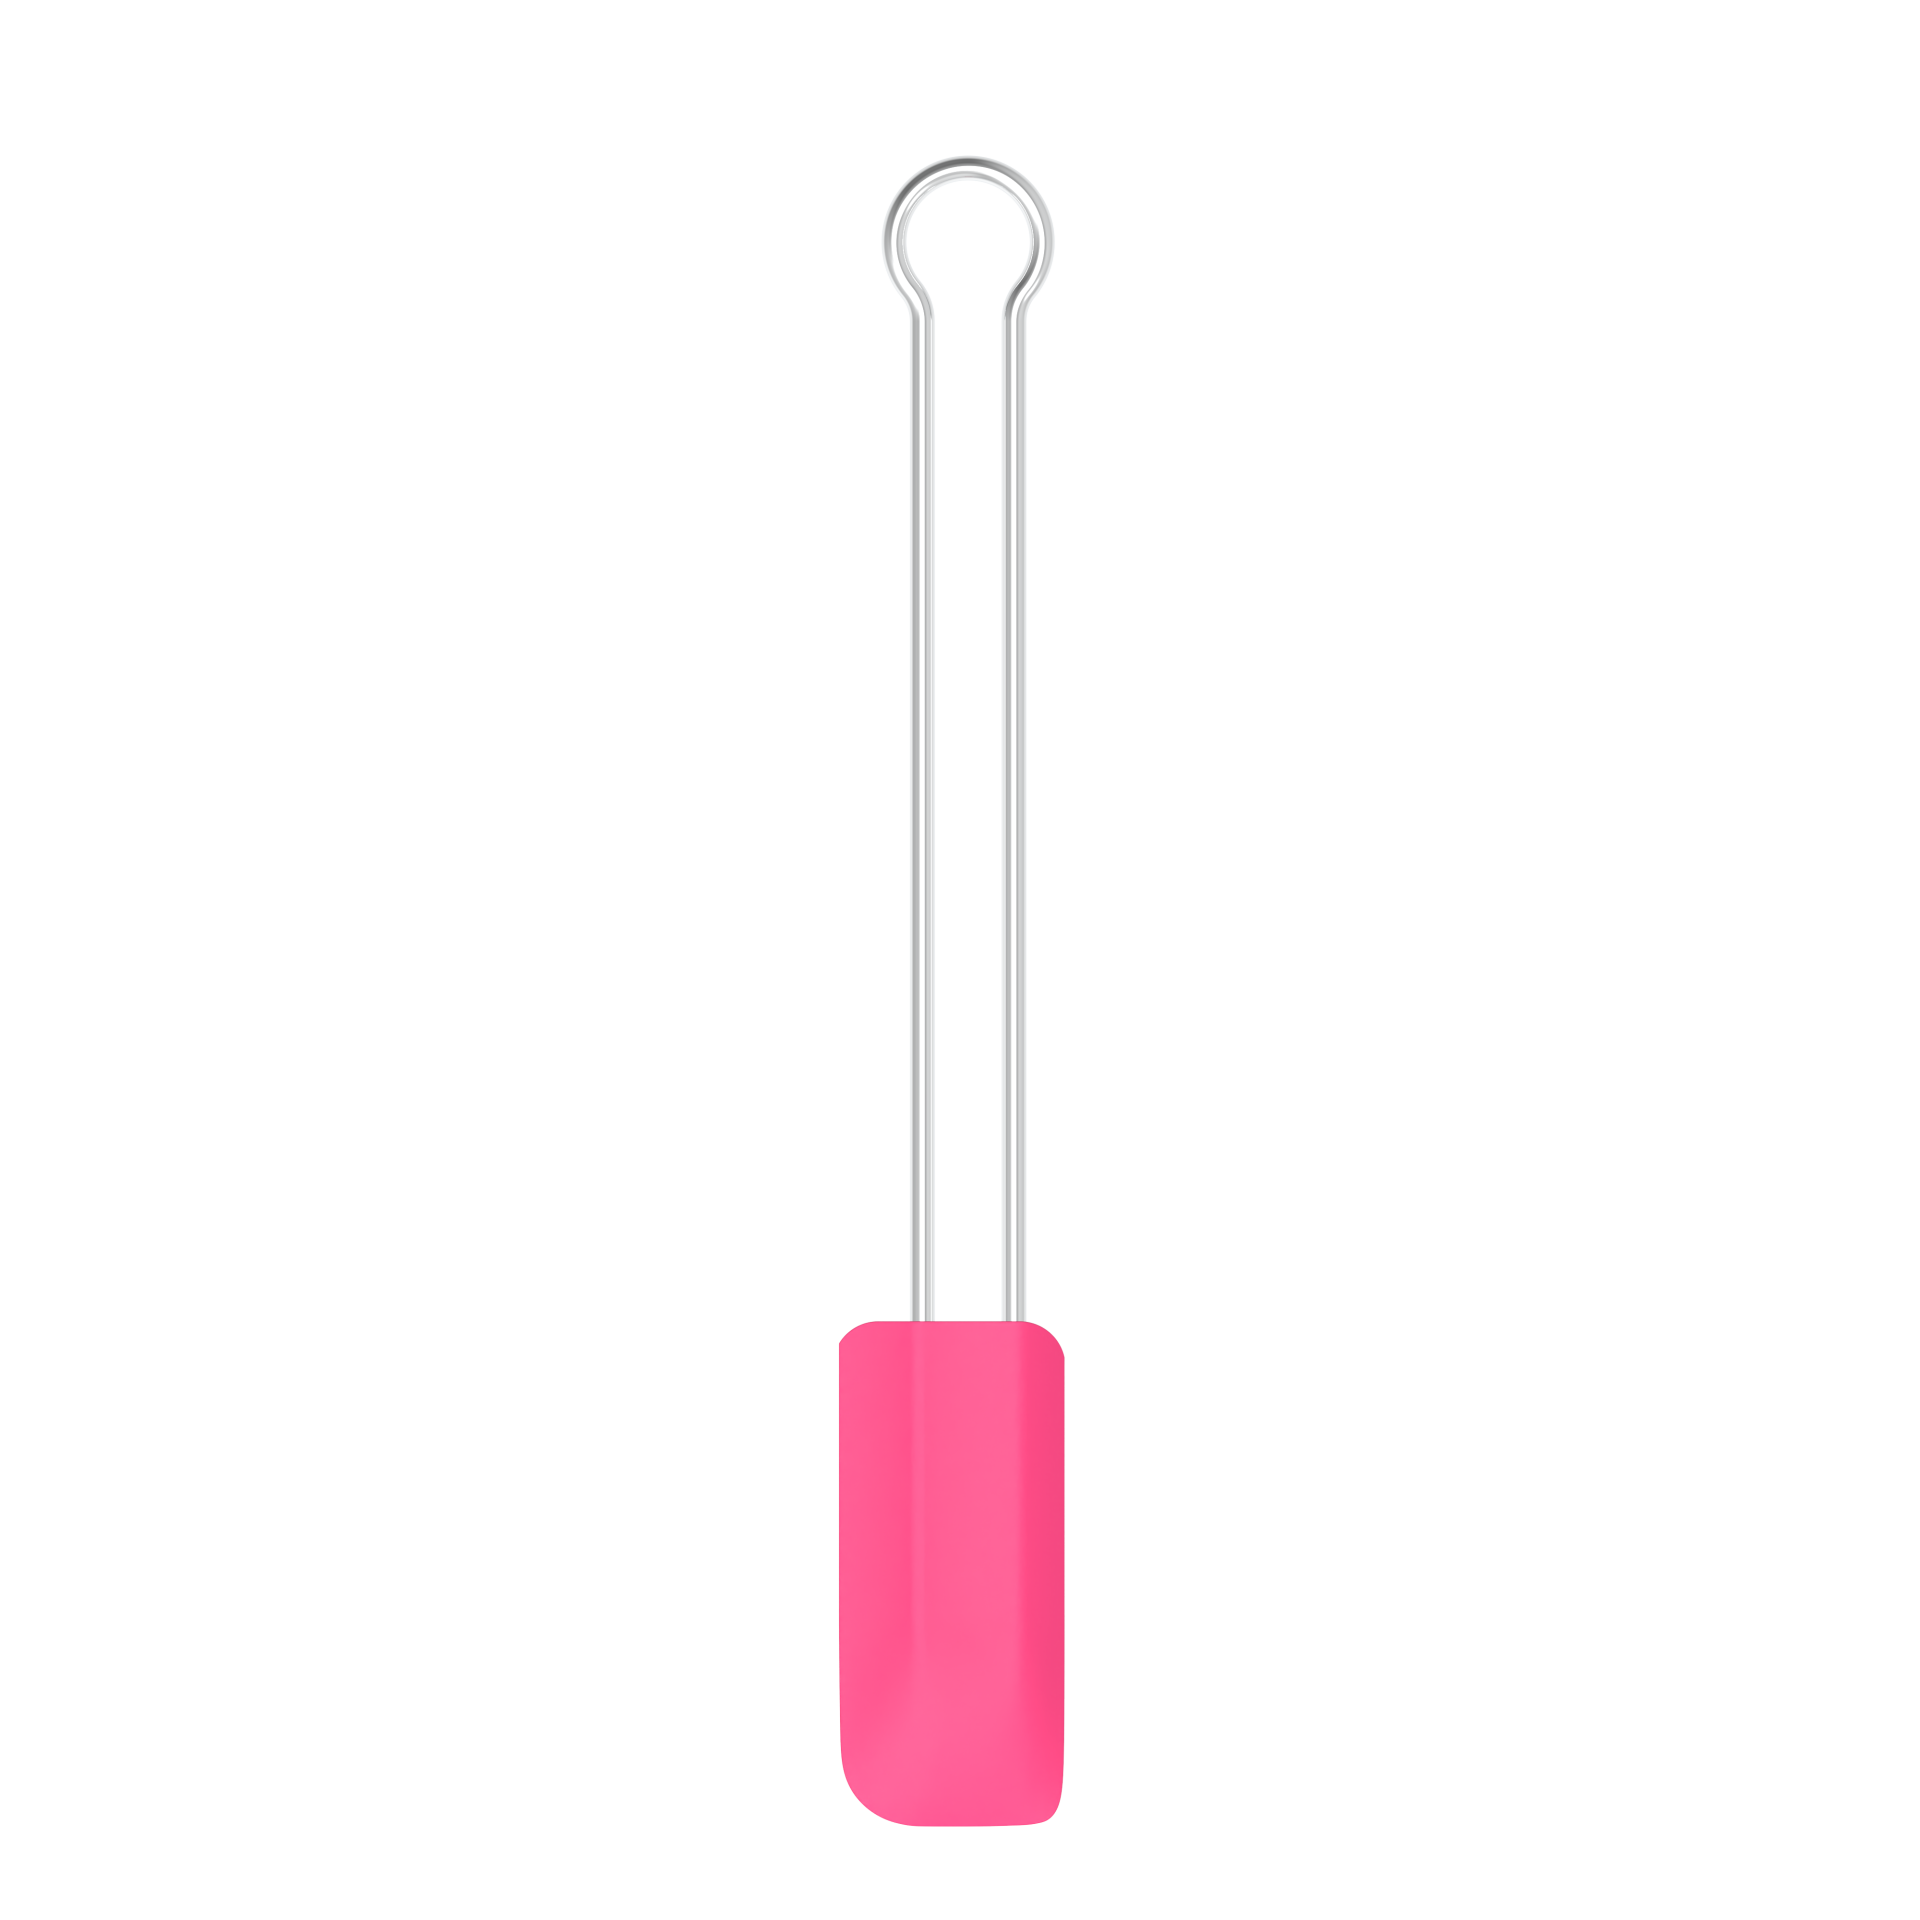 Teigschaber Kochblume klein S | Silikon, pink mit Edelstahlgriff